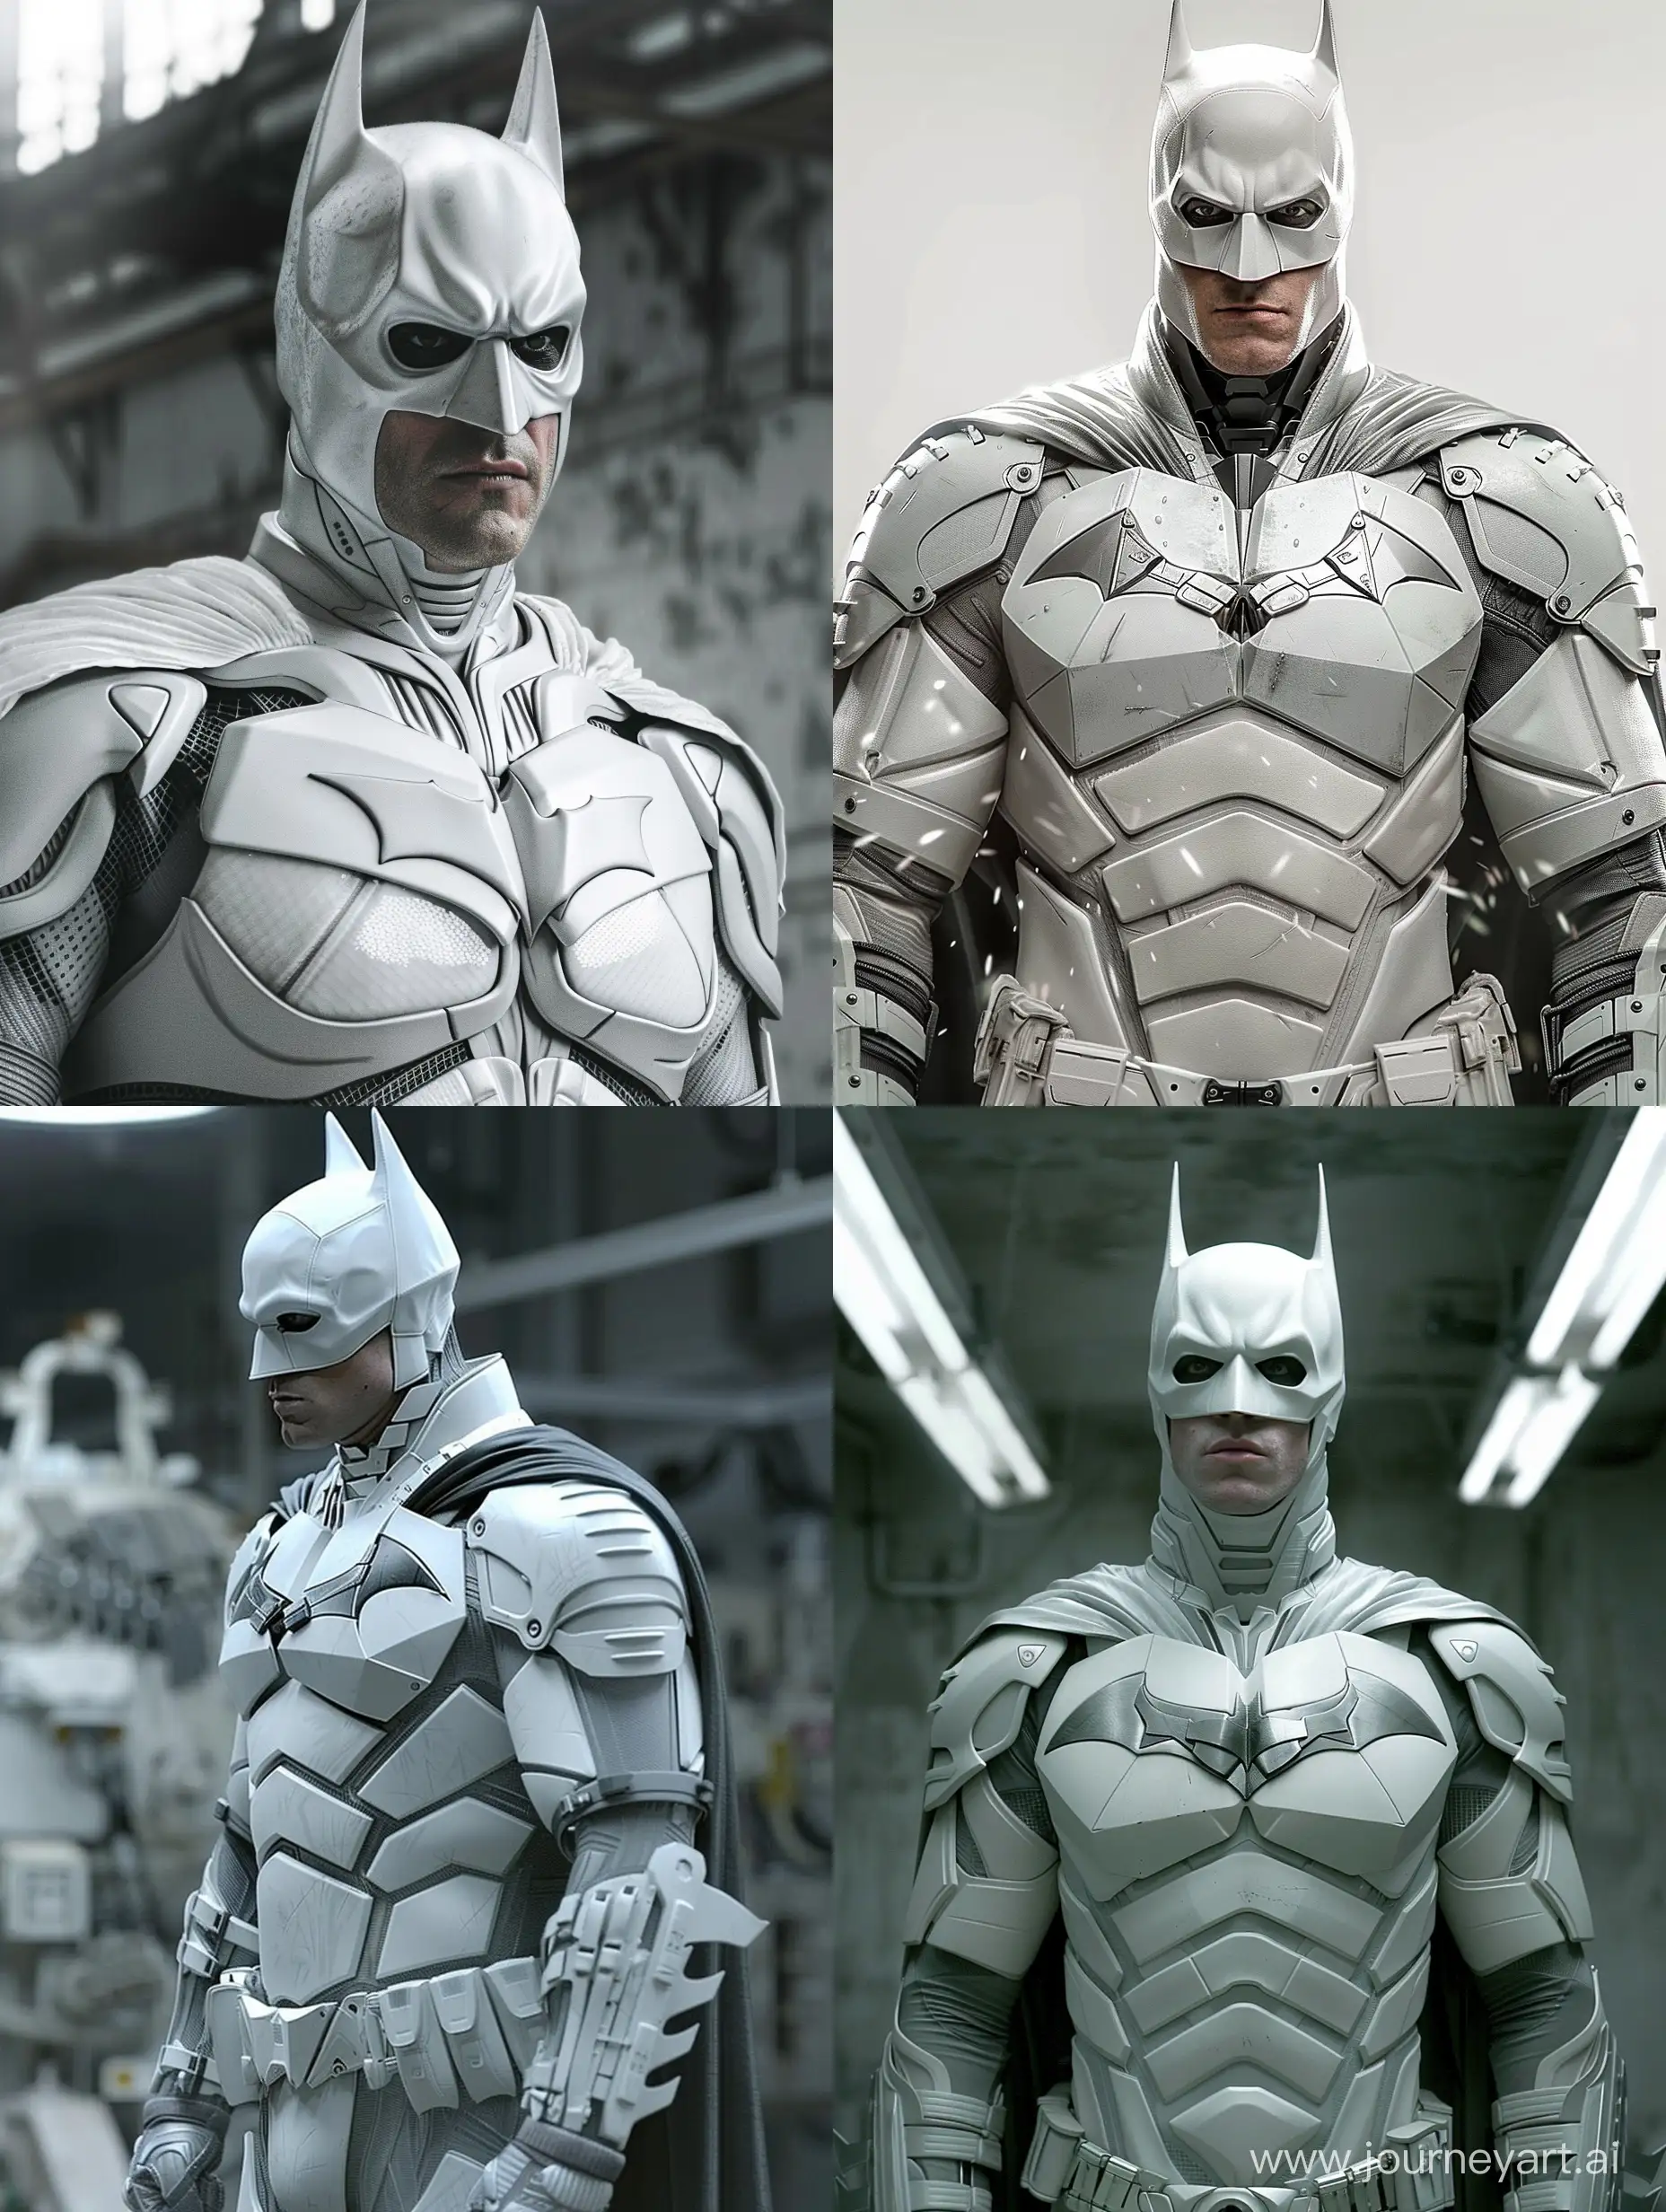 UltraRealistic-Christian-Bale-as-Batman-in-White-Suit-Portrait